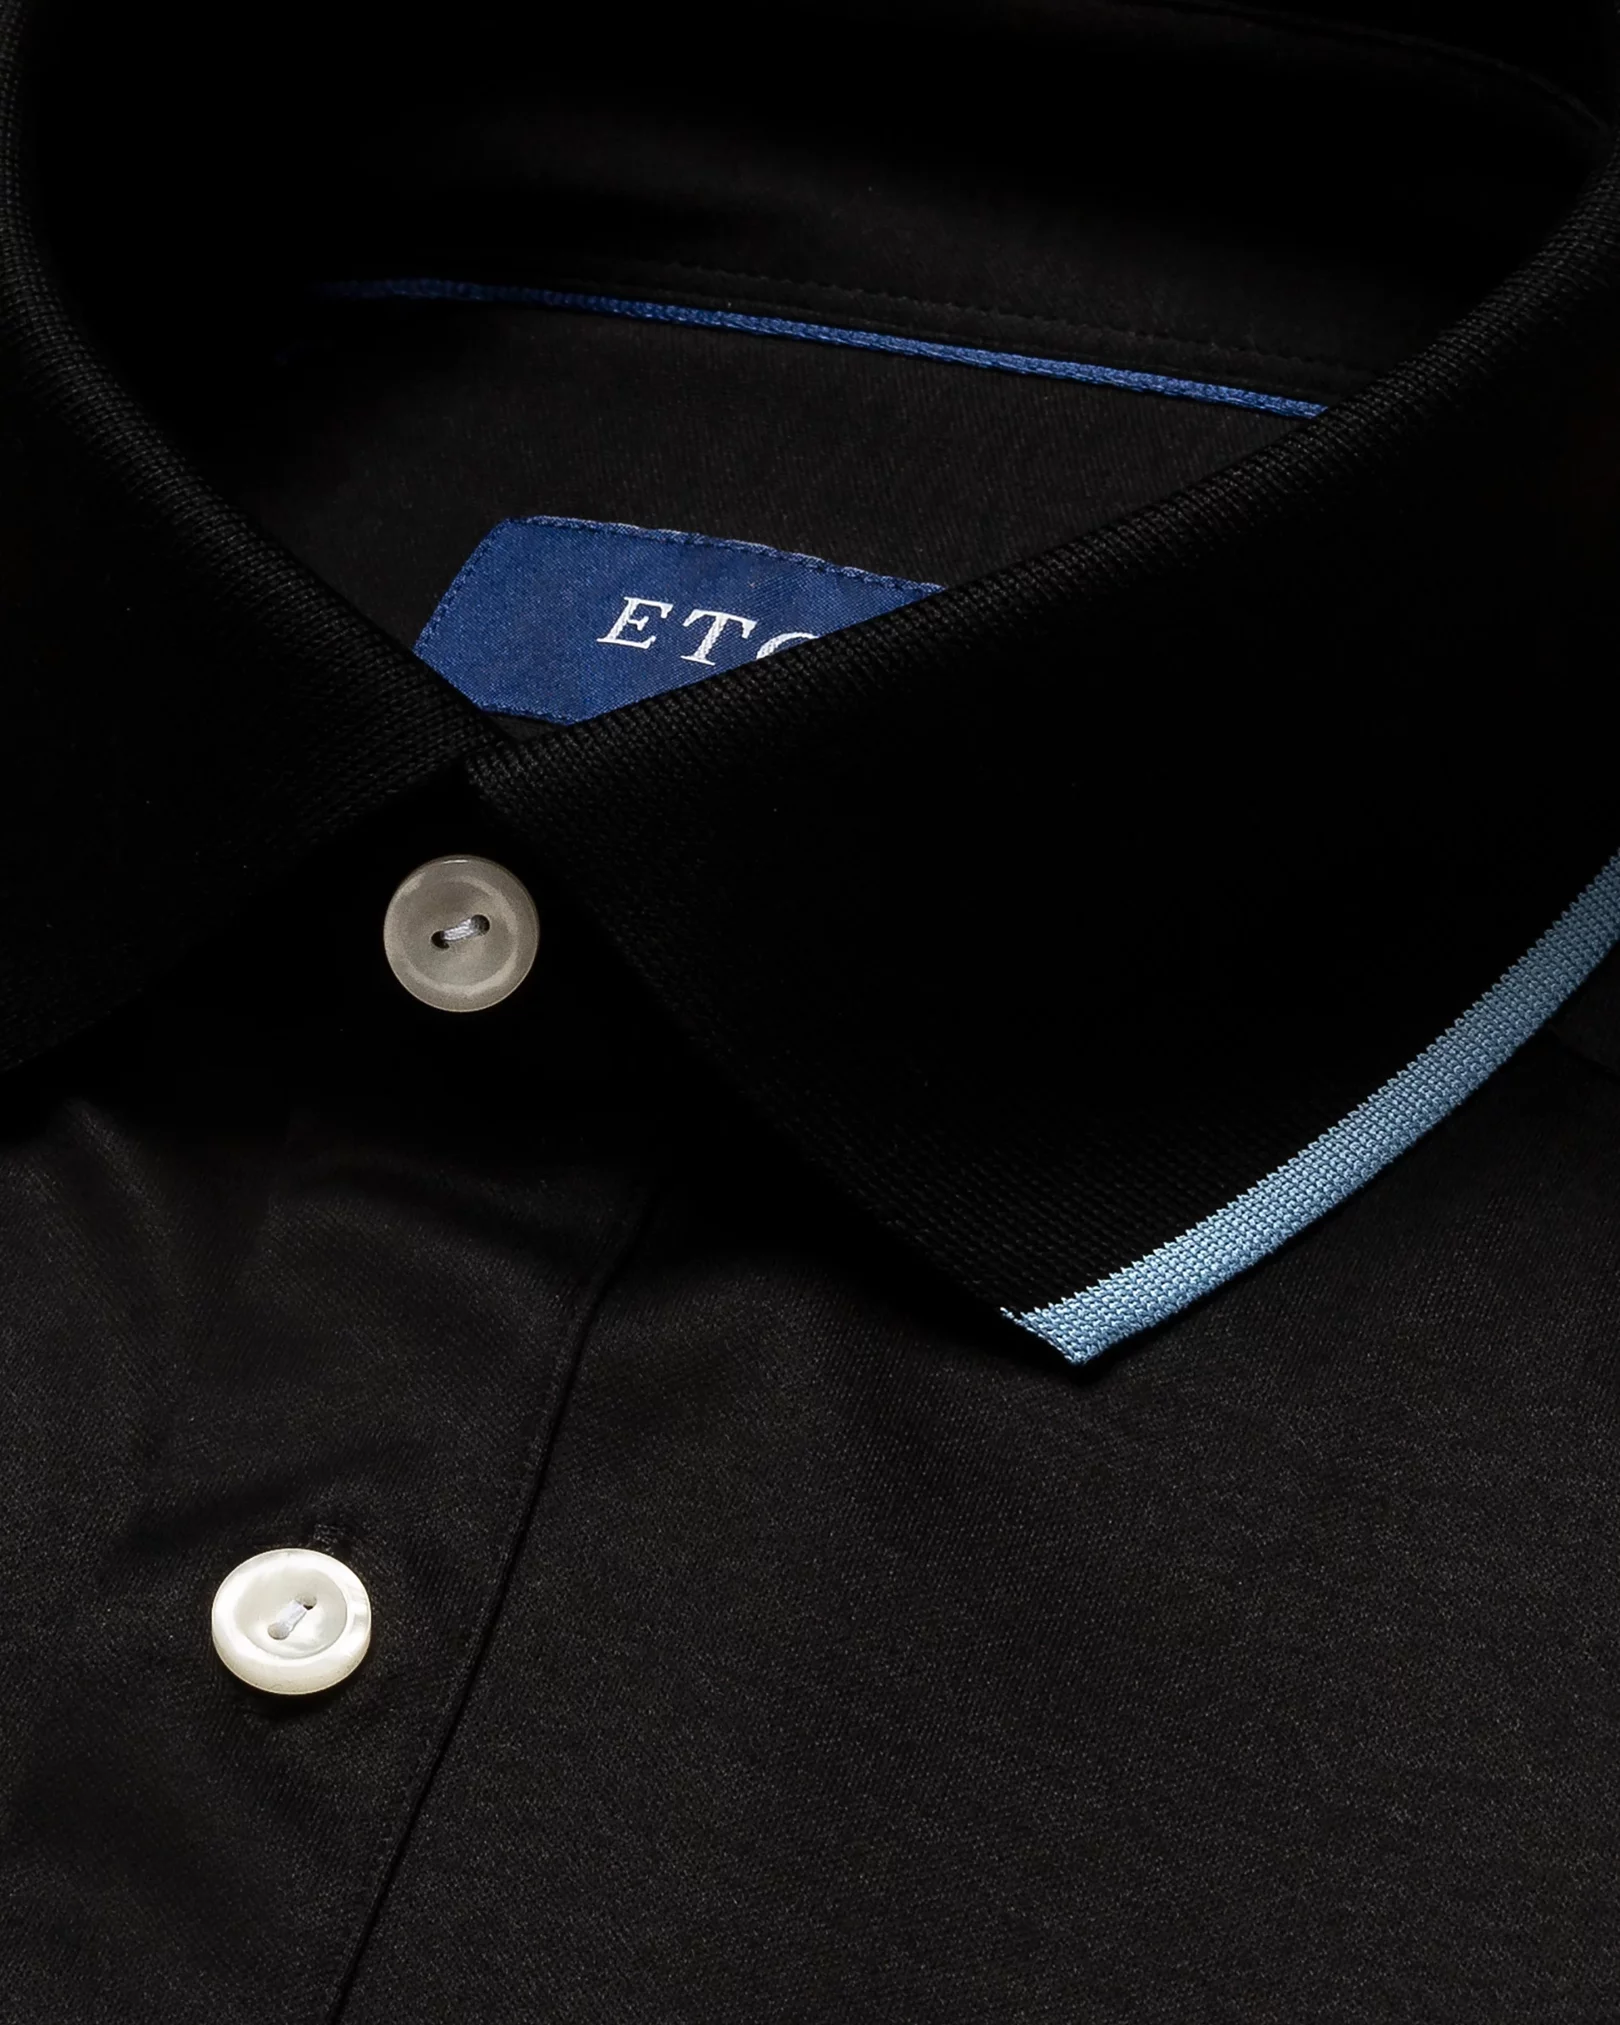 Eton - black jersey knitted collar knitted cuff short sleeve jersey ss